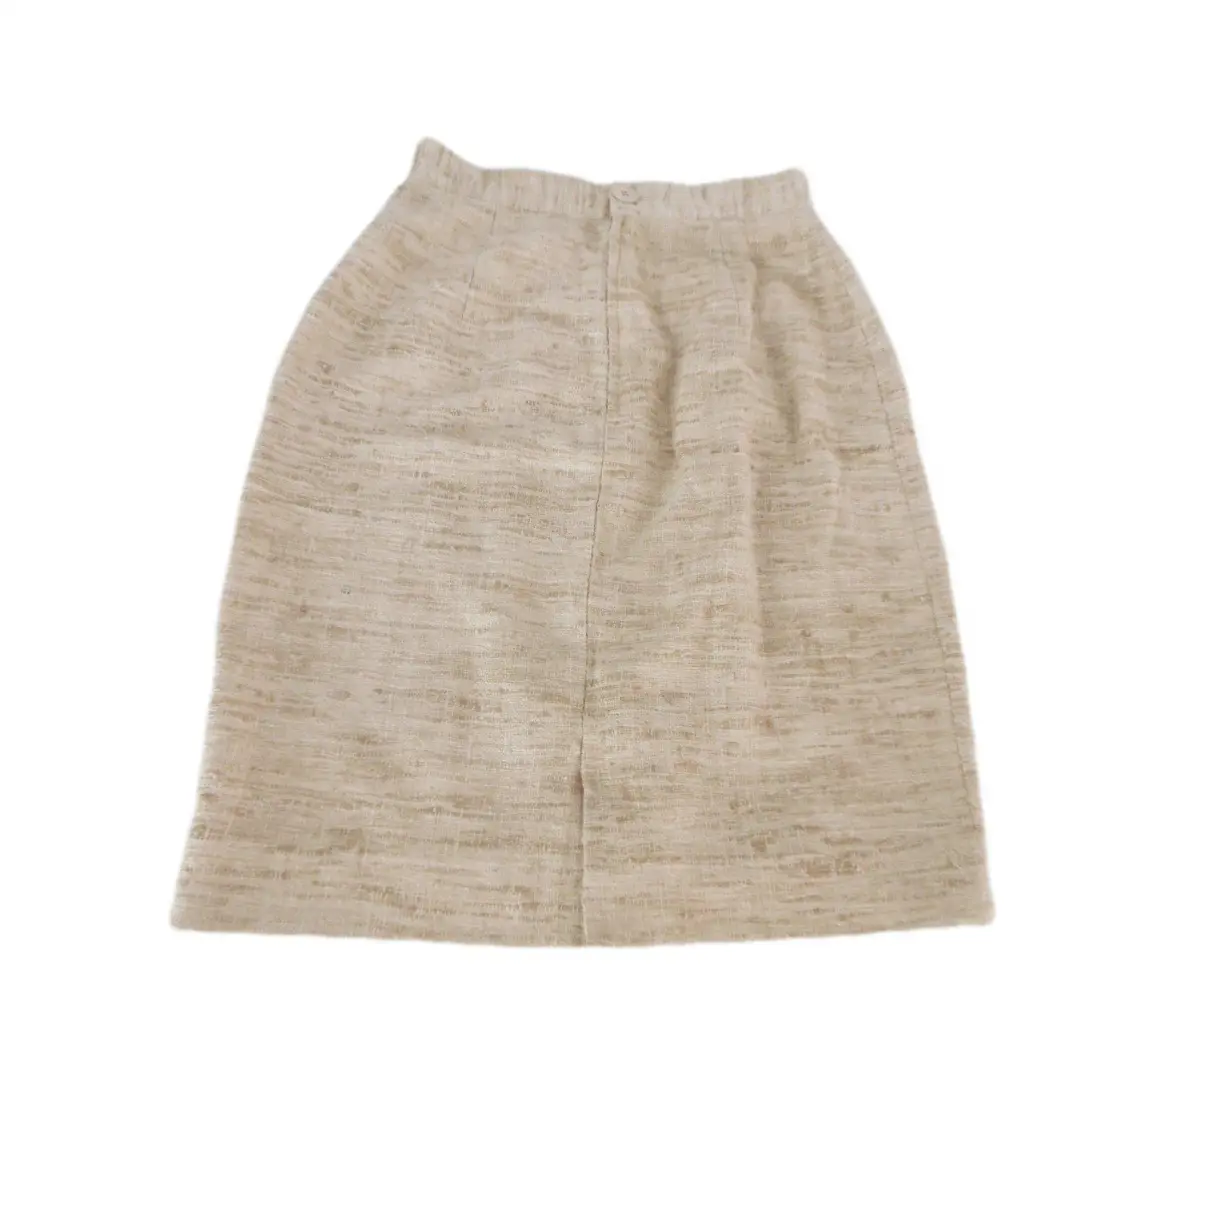 Buy Gianfranco Ferré Silk skirt online